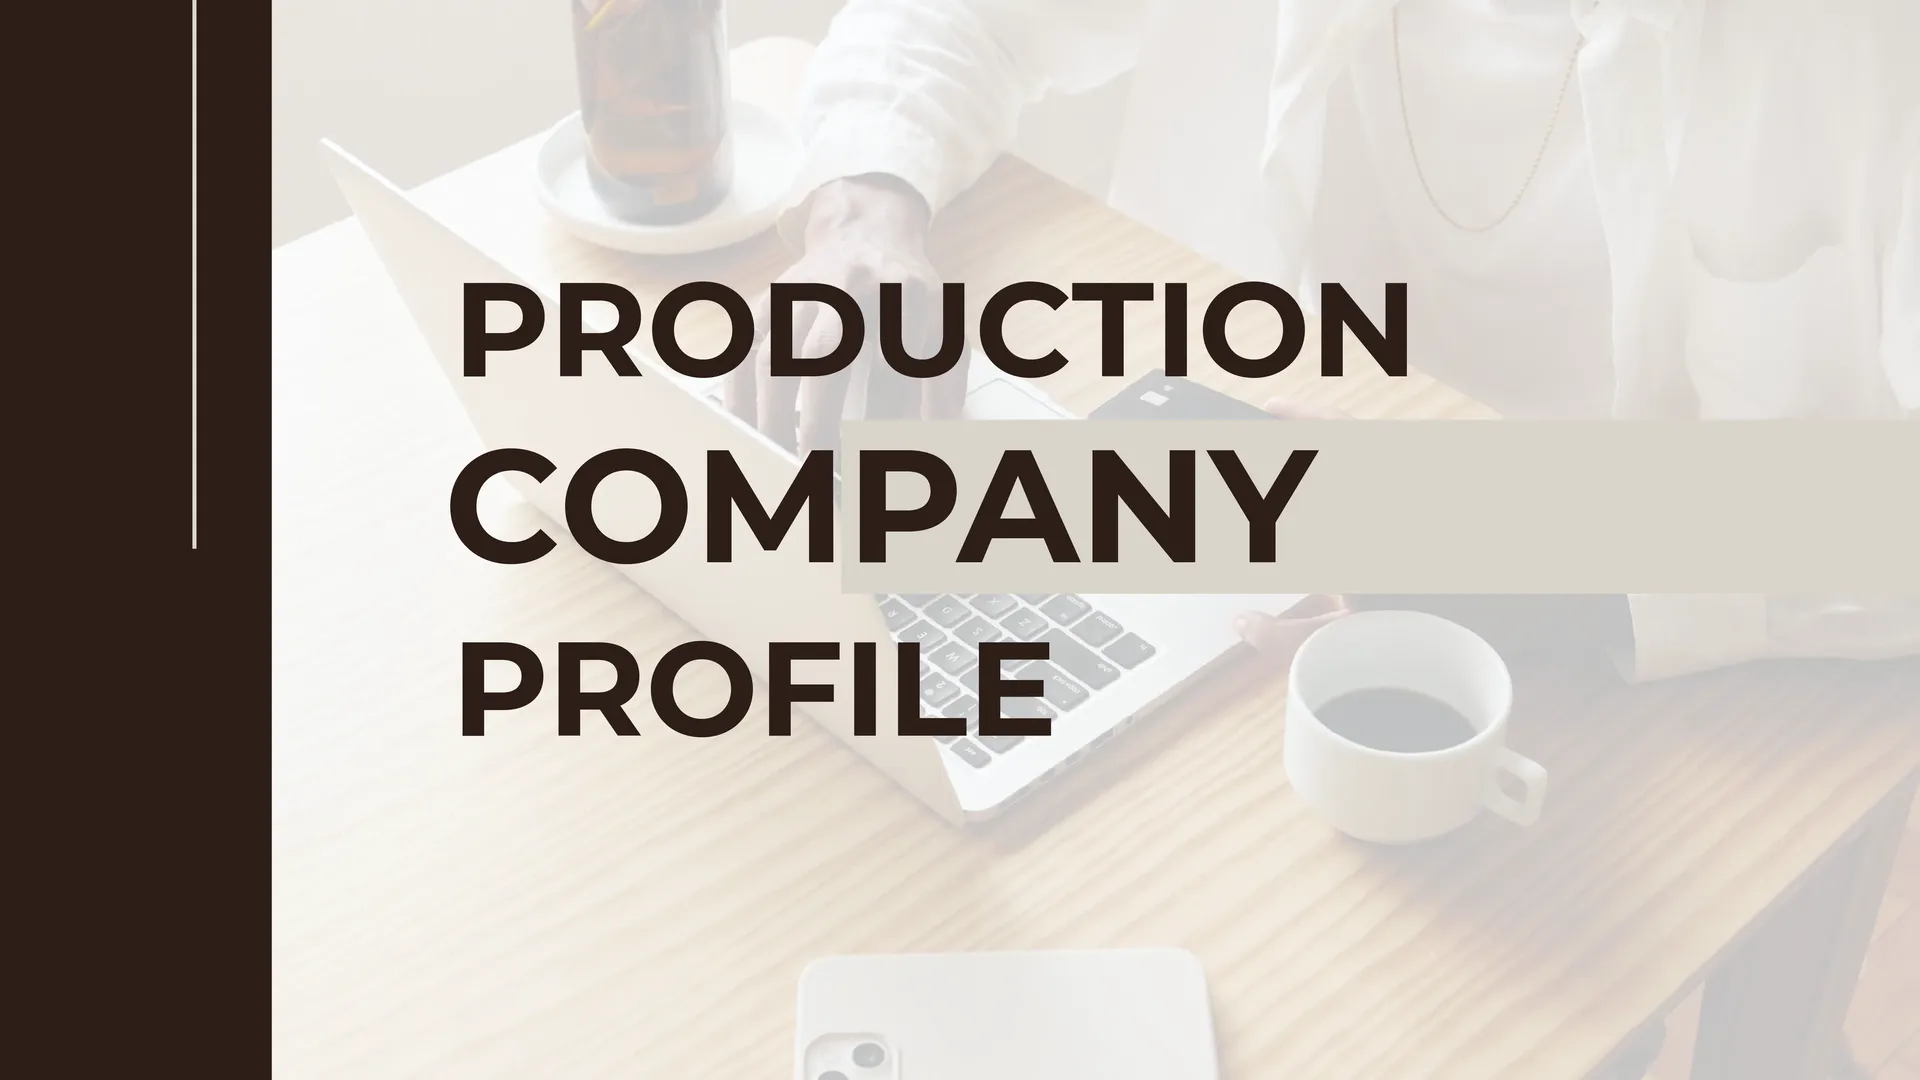 Production Company Profile Template